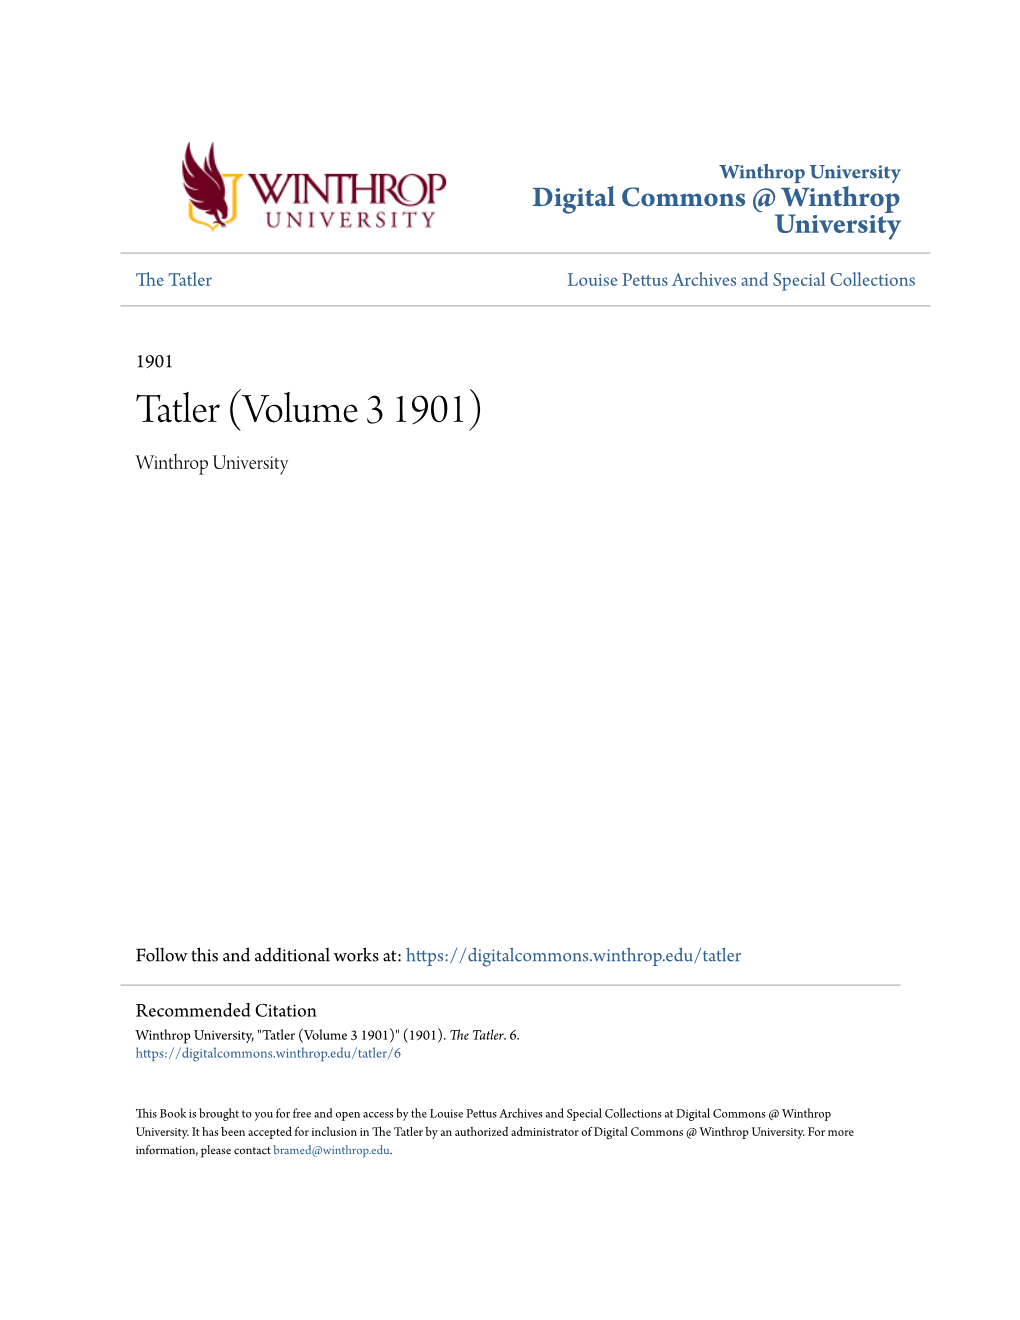 Tatler (Volume 3 1901) Winthrop University